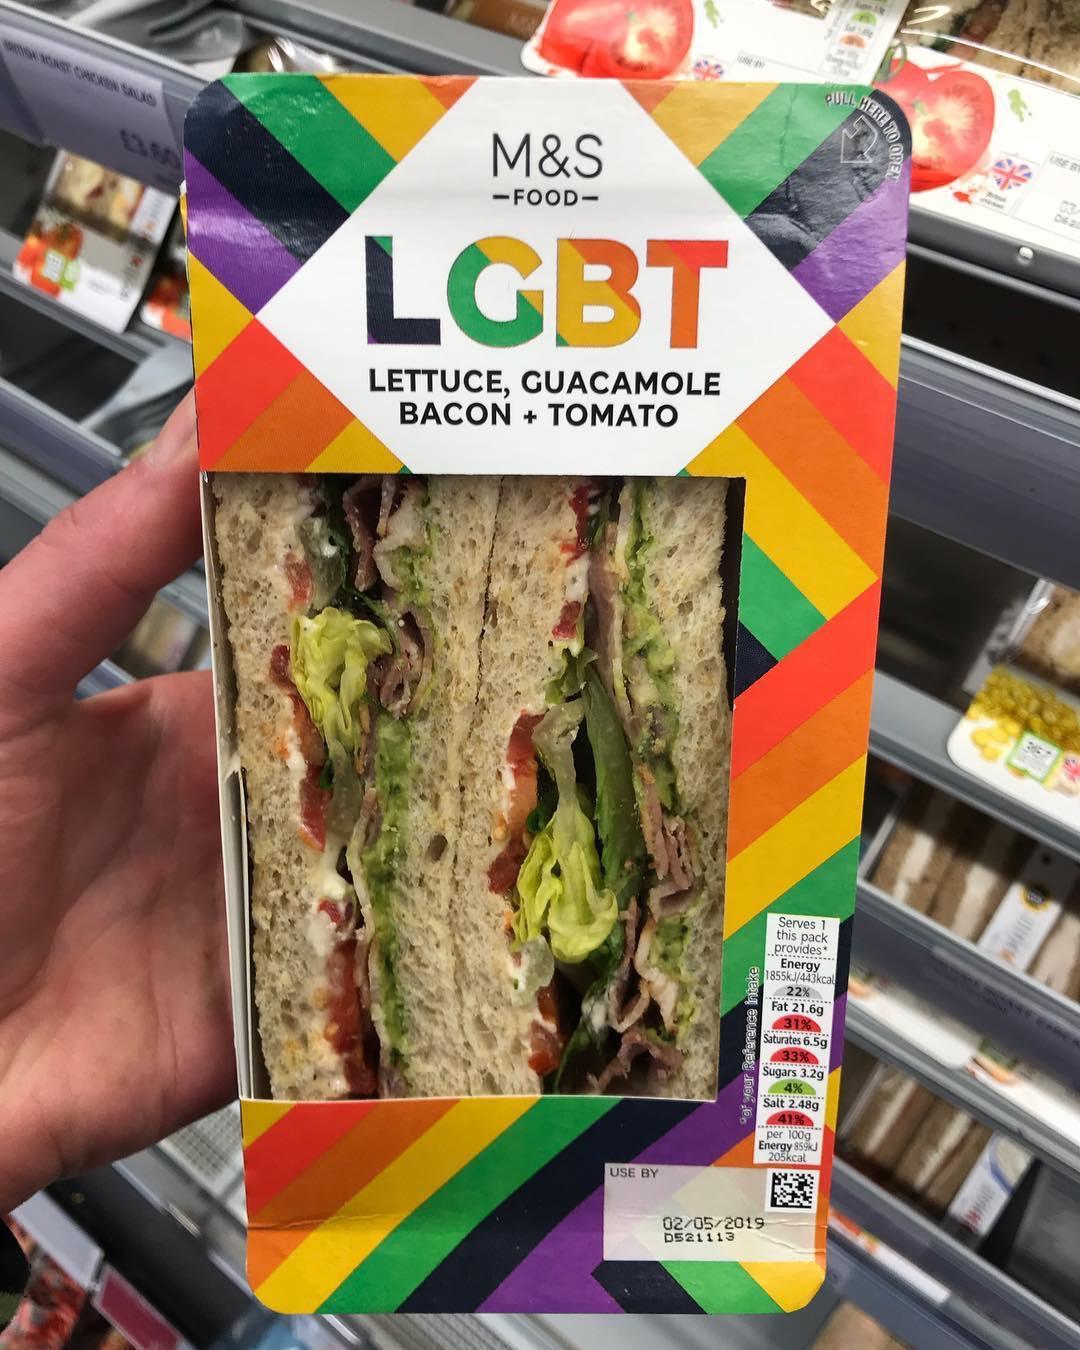 The LGBT sandwich is pretty good.